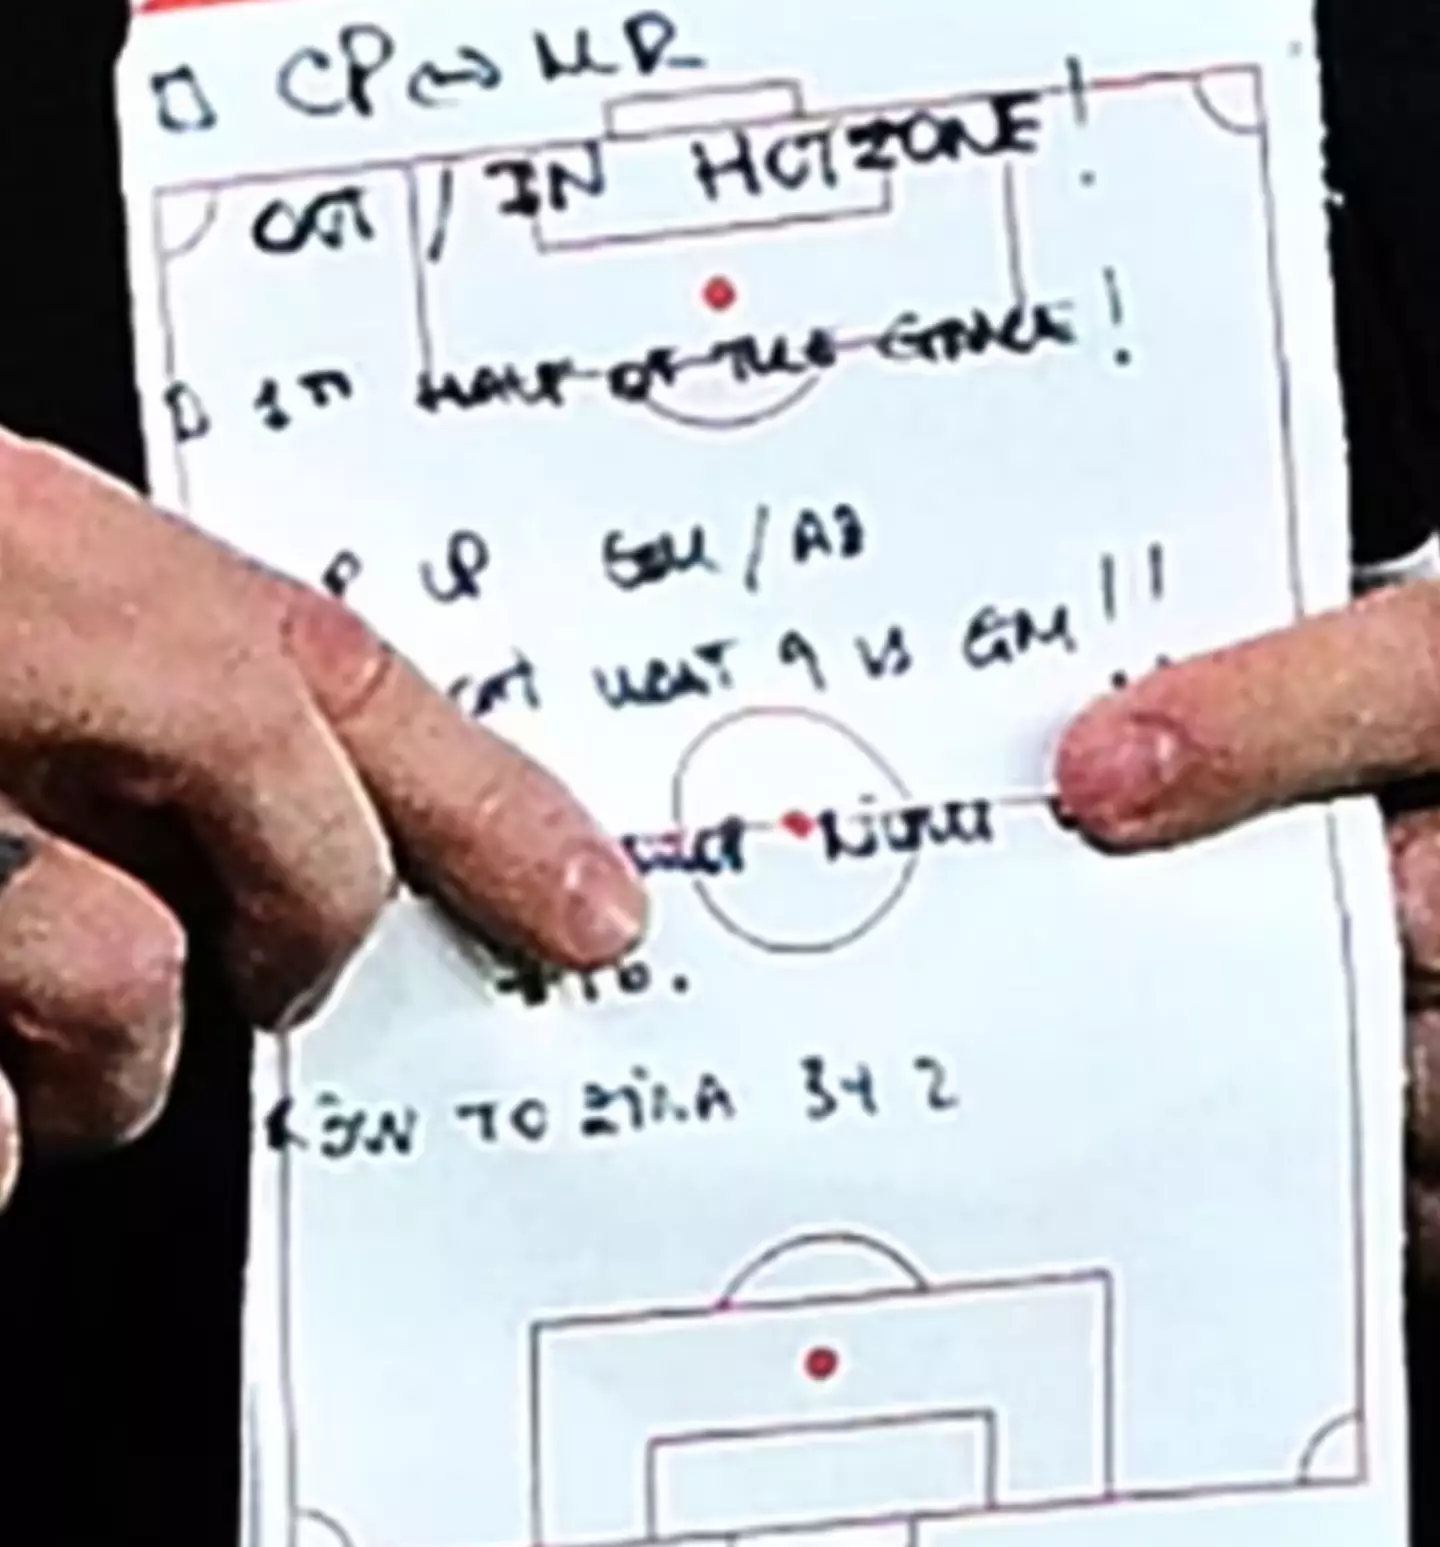 Mikel Arteta shows his Arsenal tactics sheets. Image: Getty